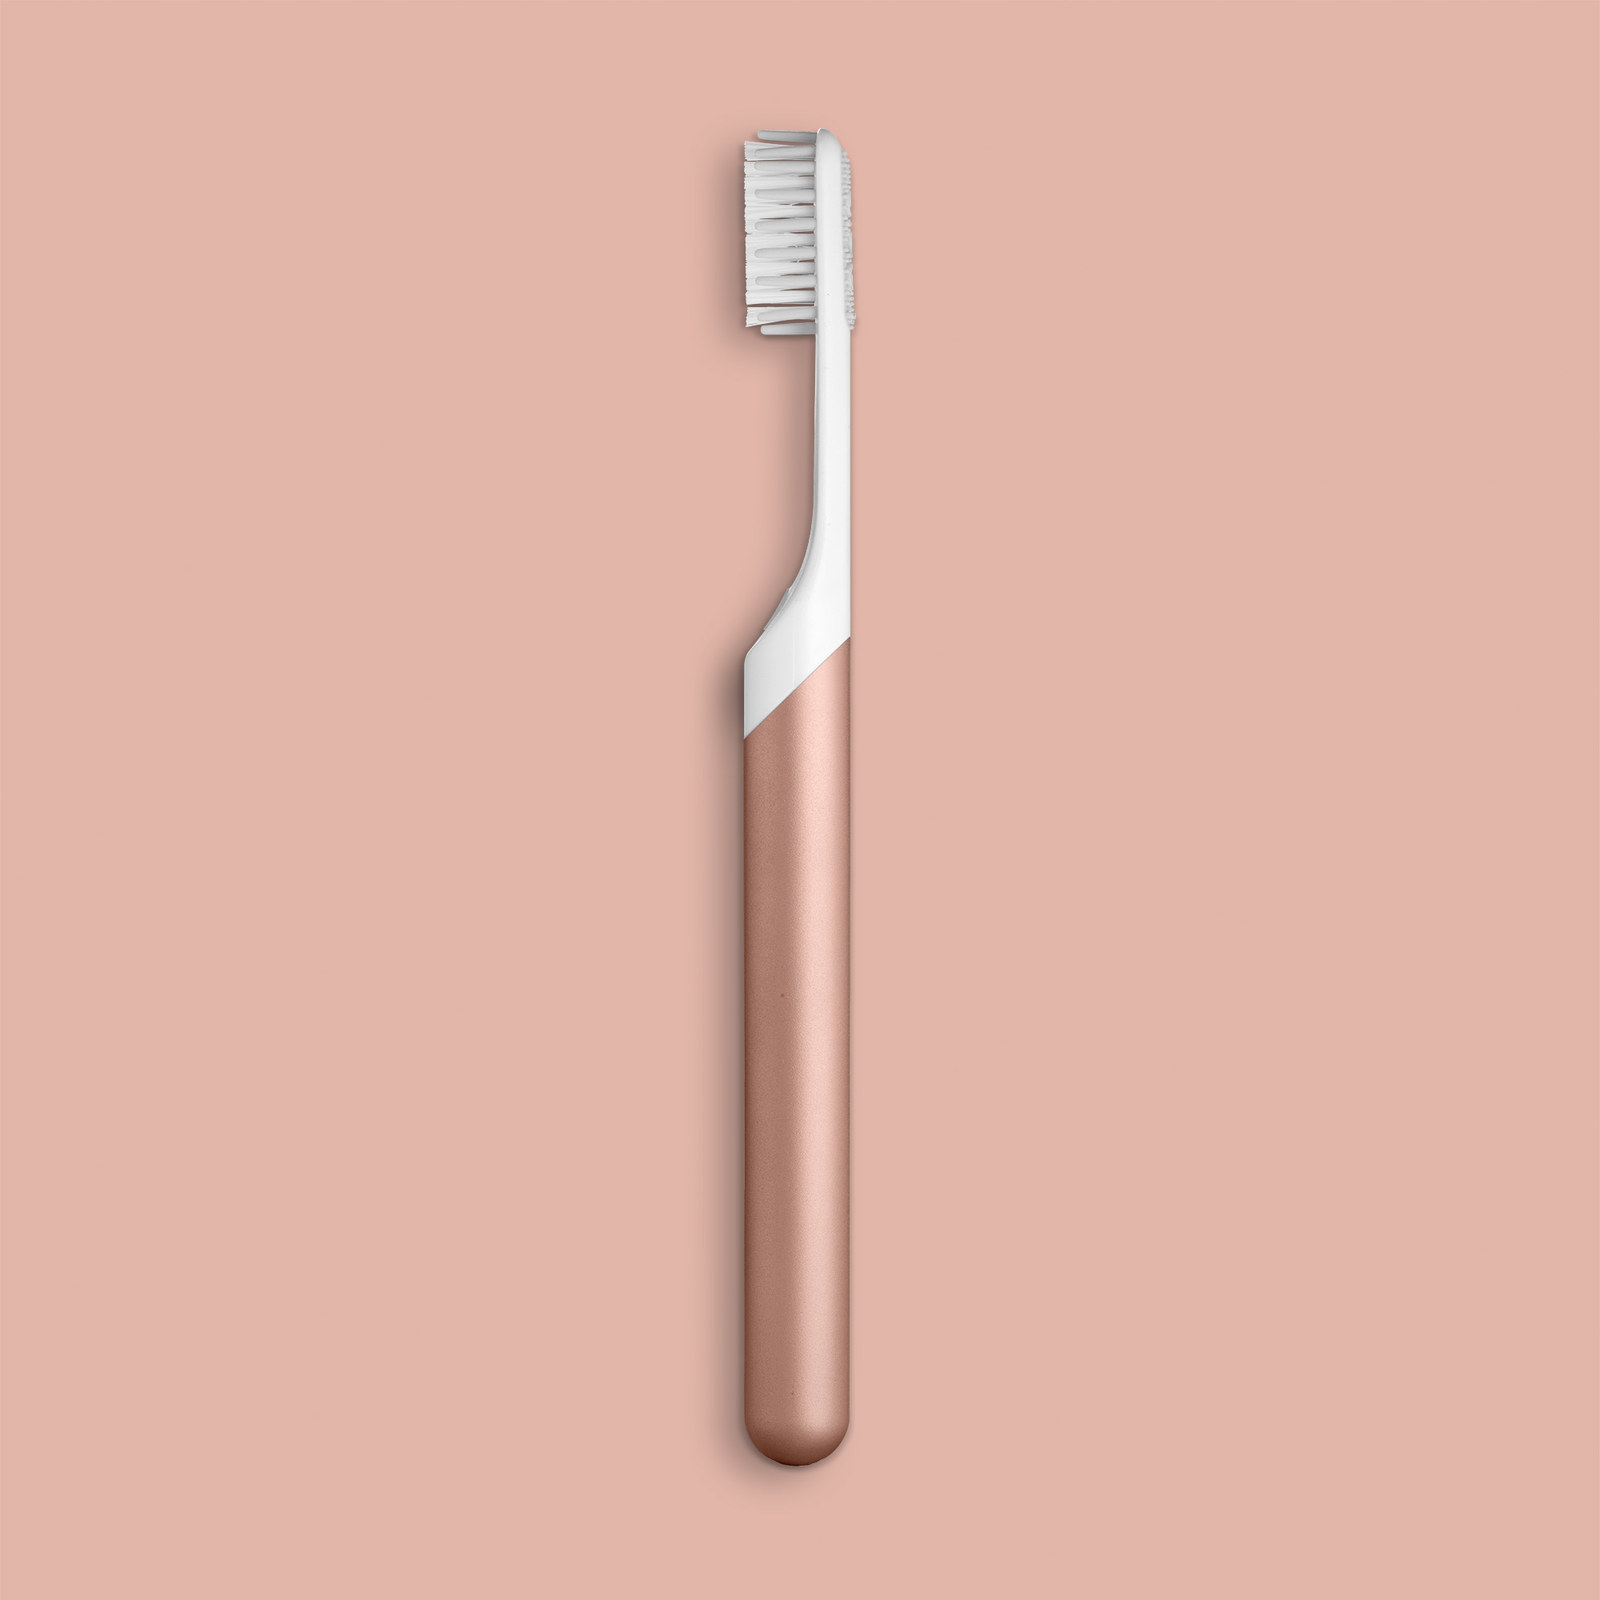 quip toothbrush head